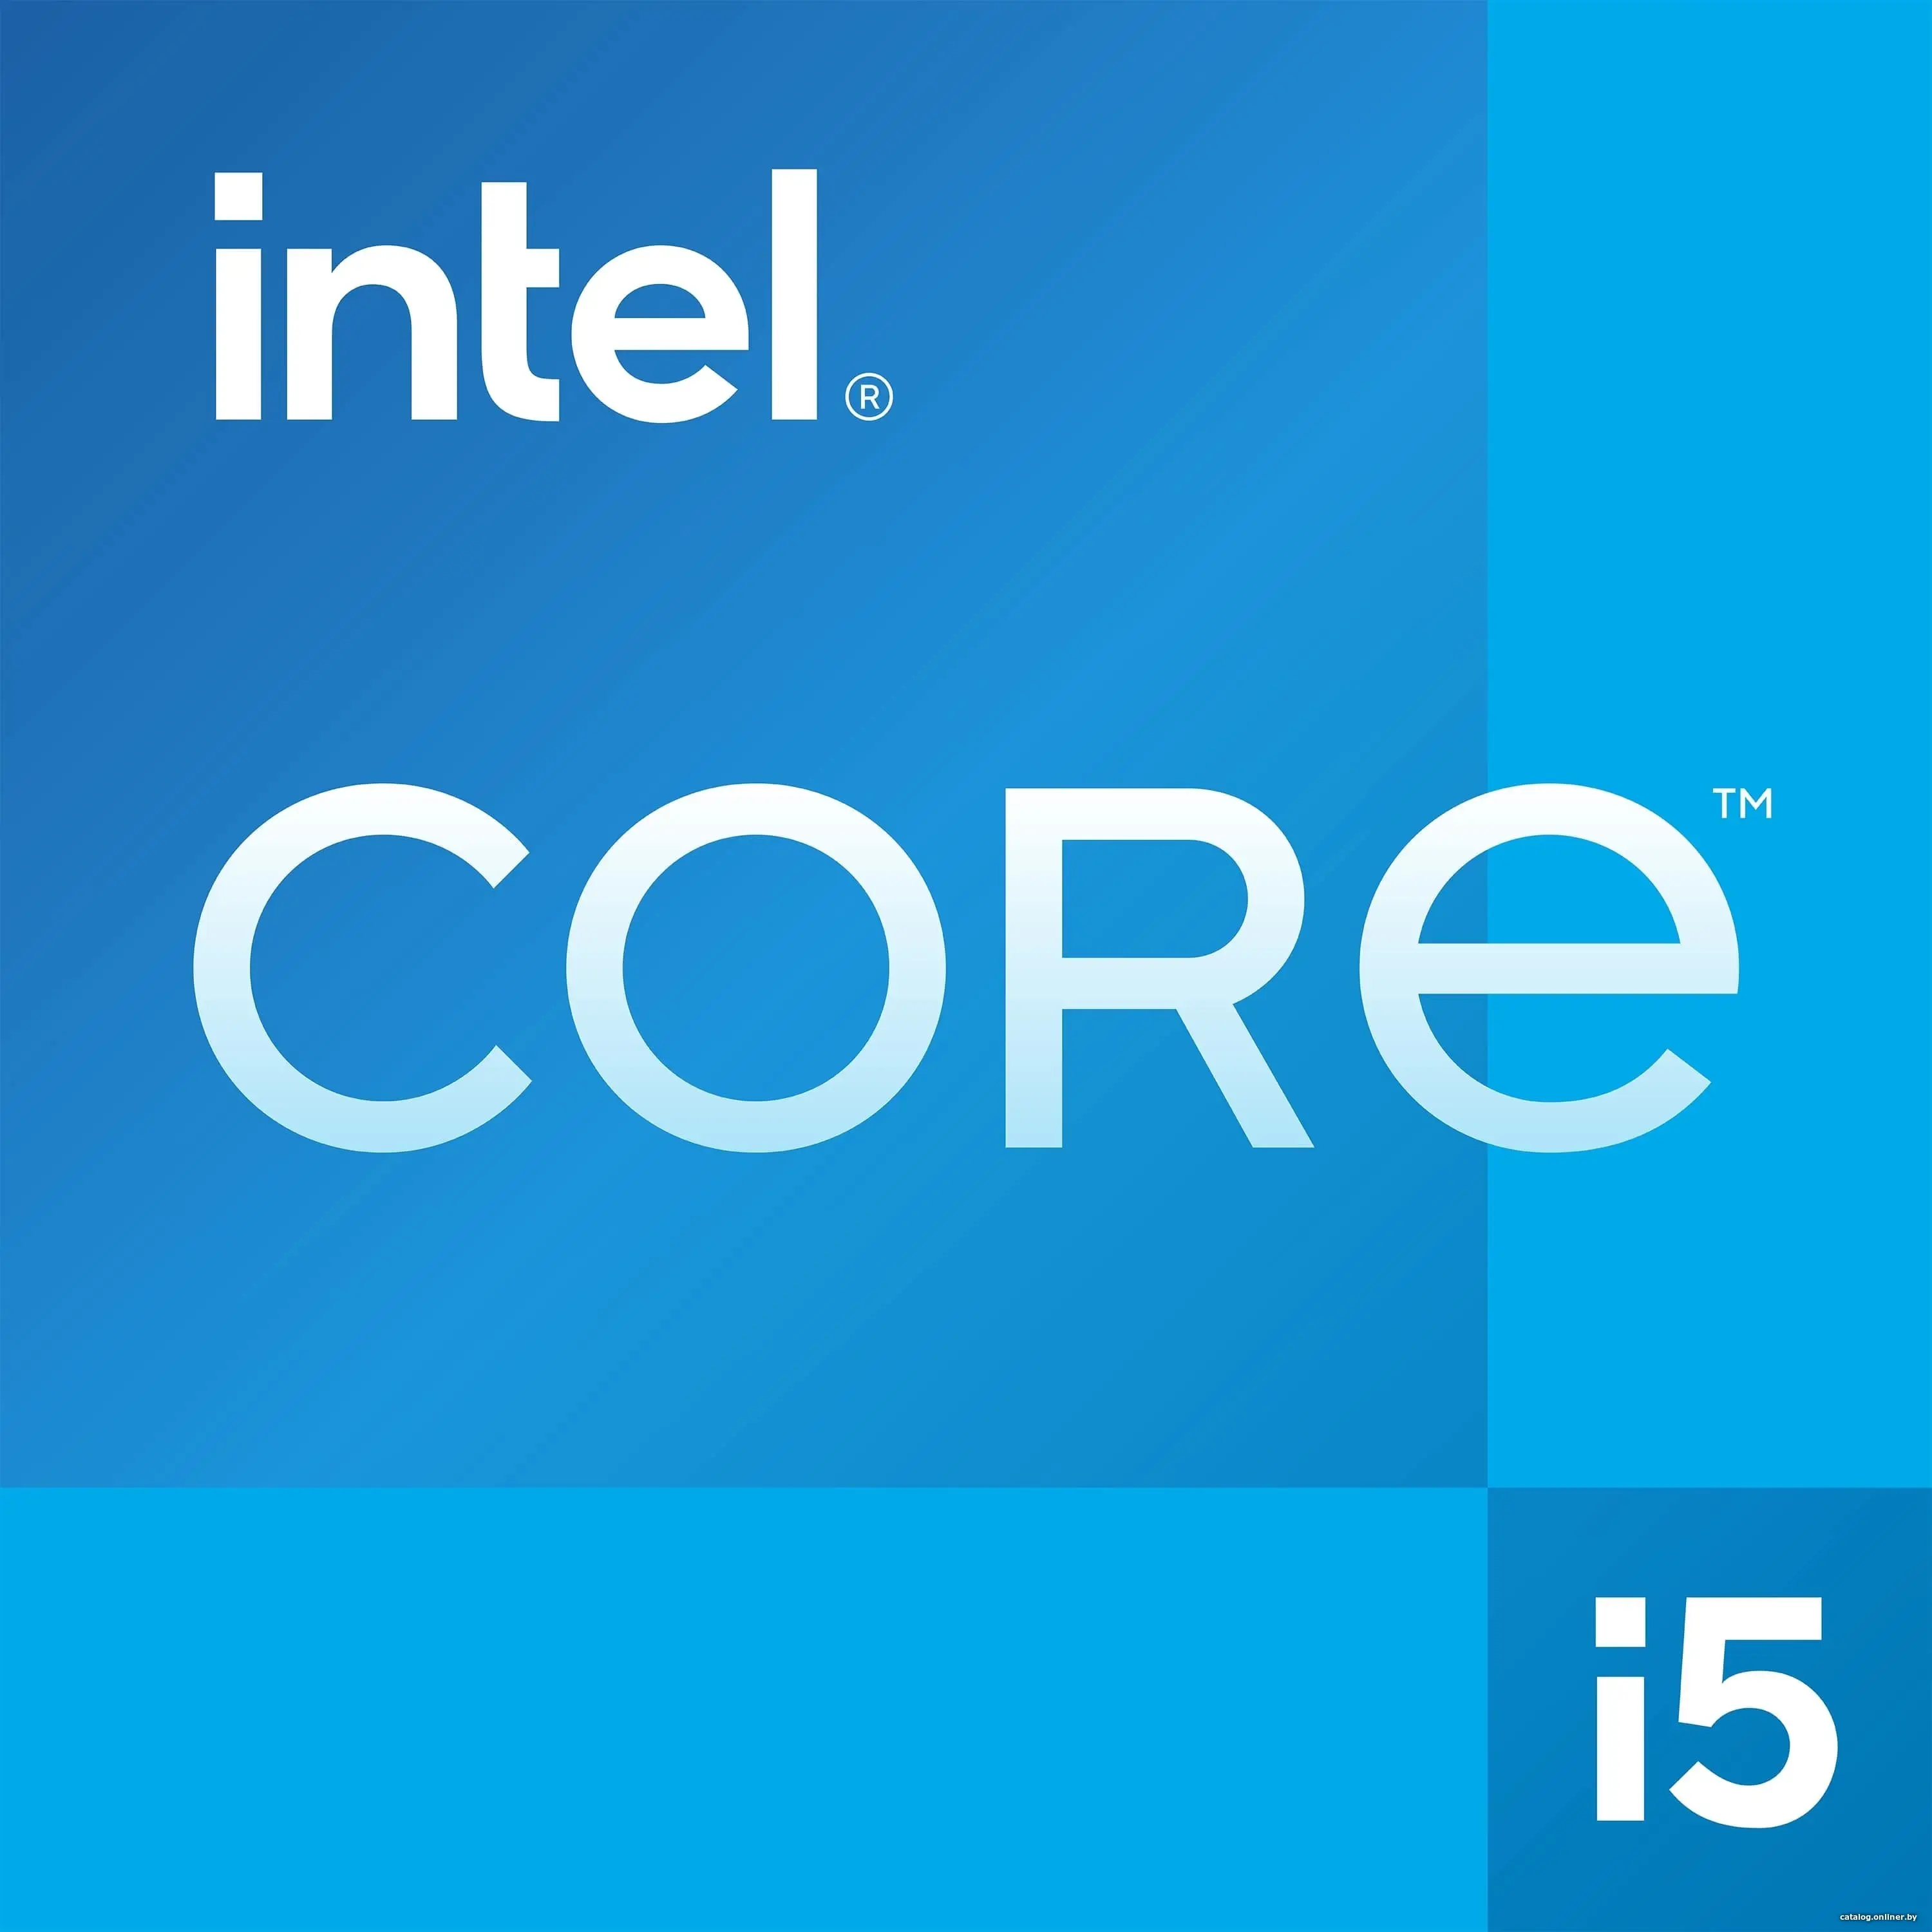 Купить Процессор Intel Core i5-11400F, цена, опт и розница